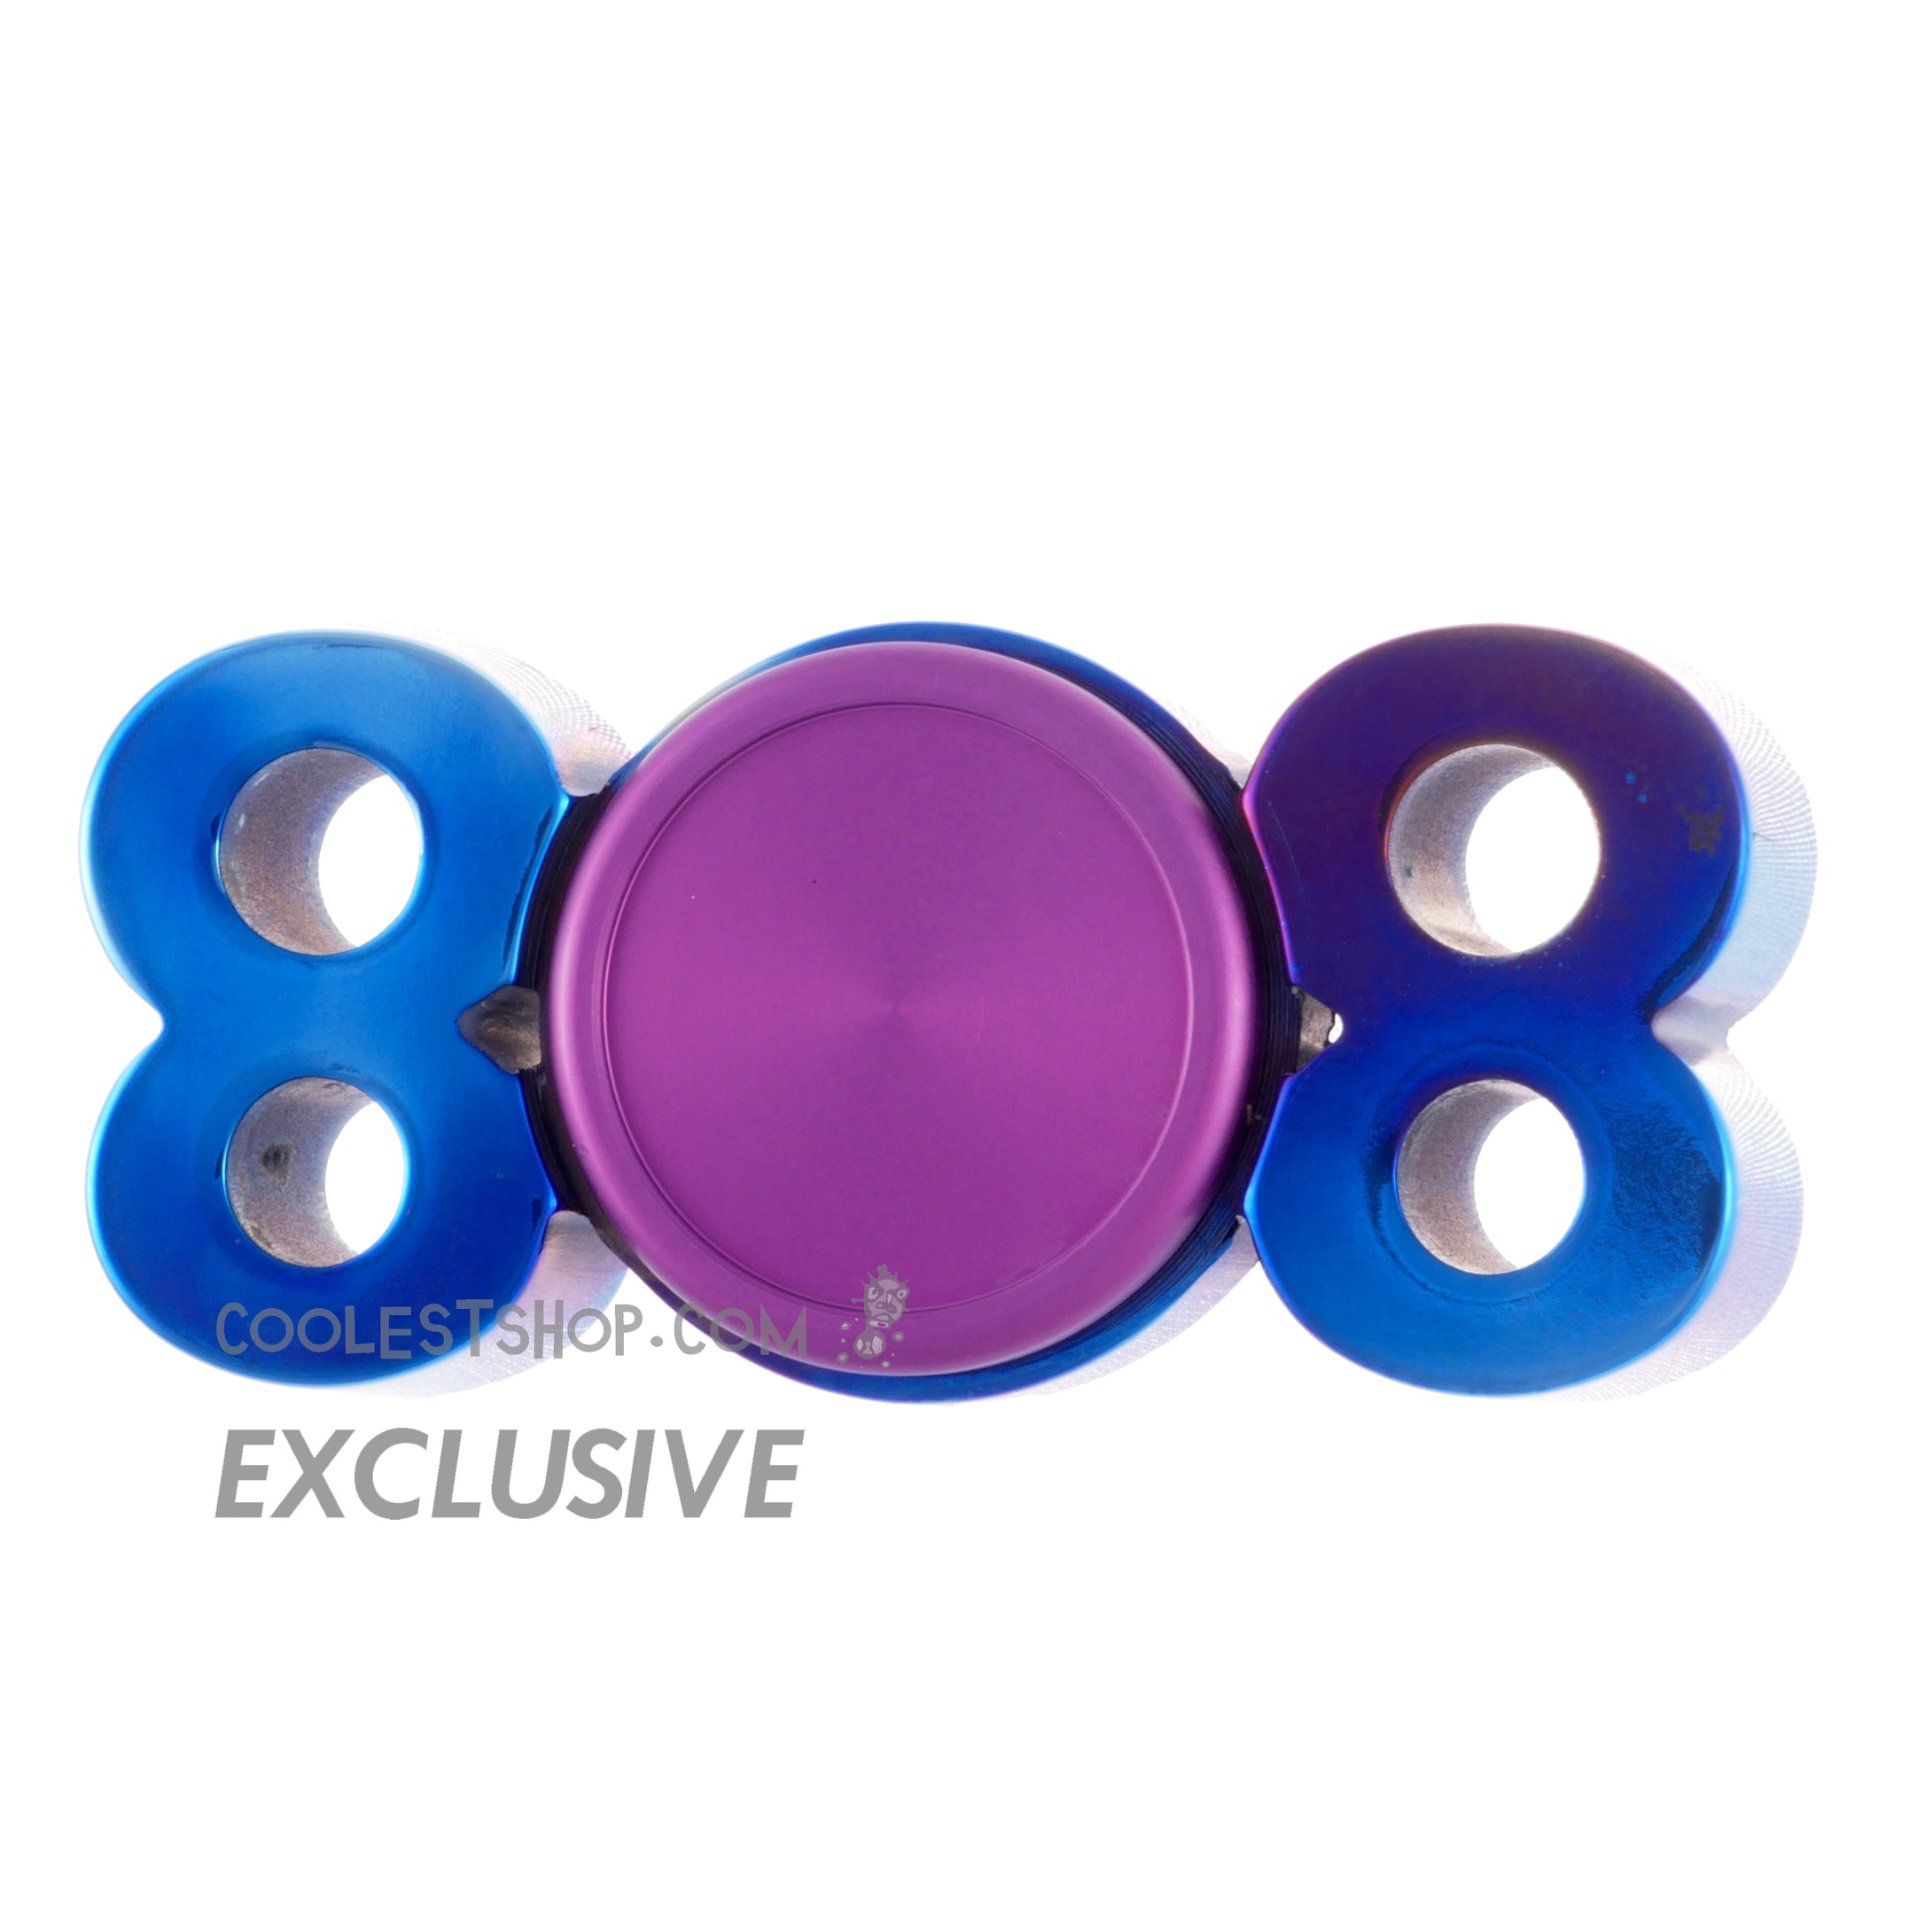 808 Spinner • GEN 2 • by Steampunk Spinners • Titanium • coolestshop.com exclusive #3